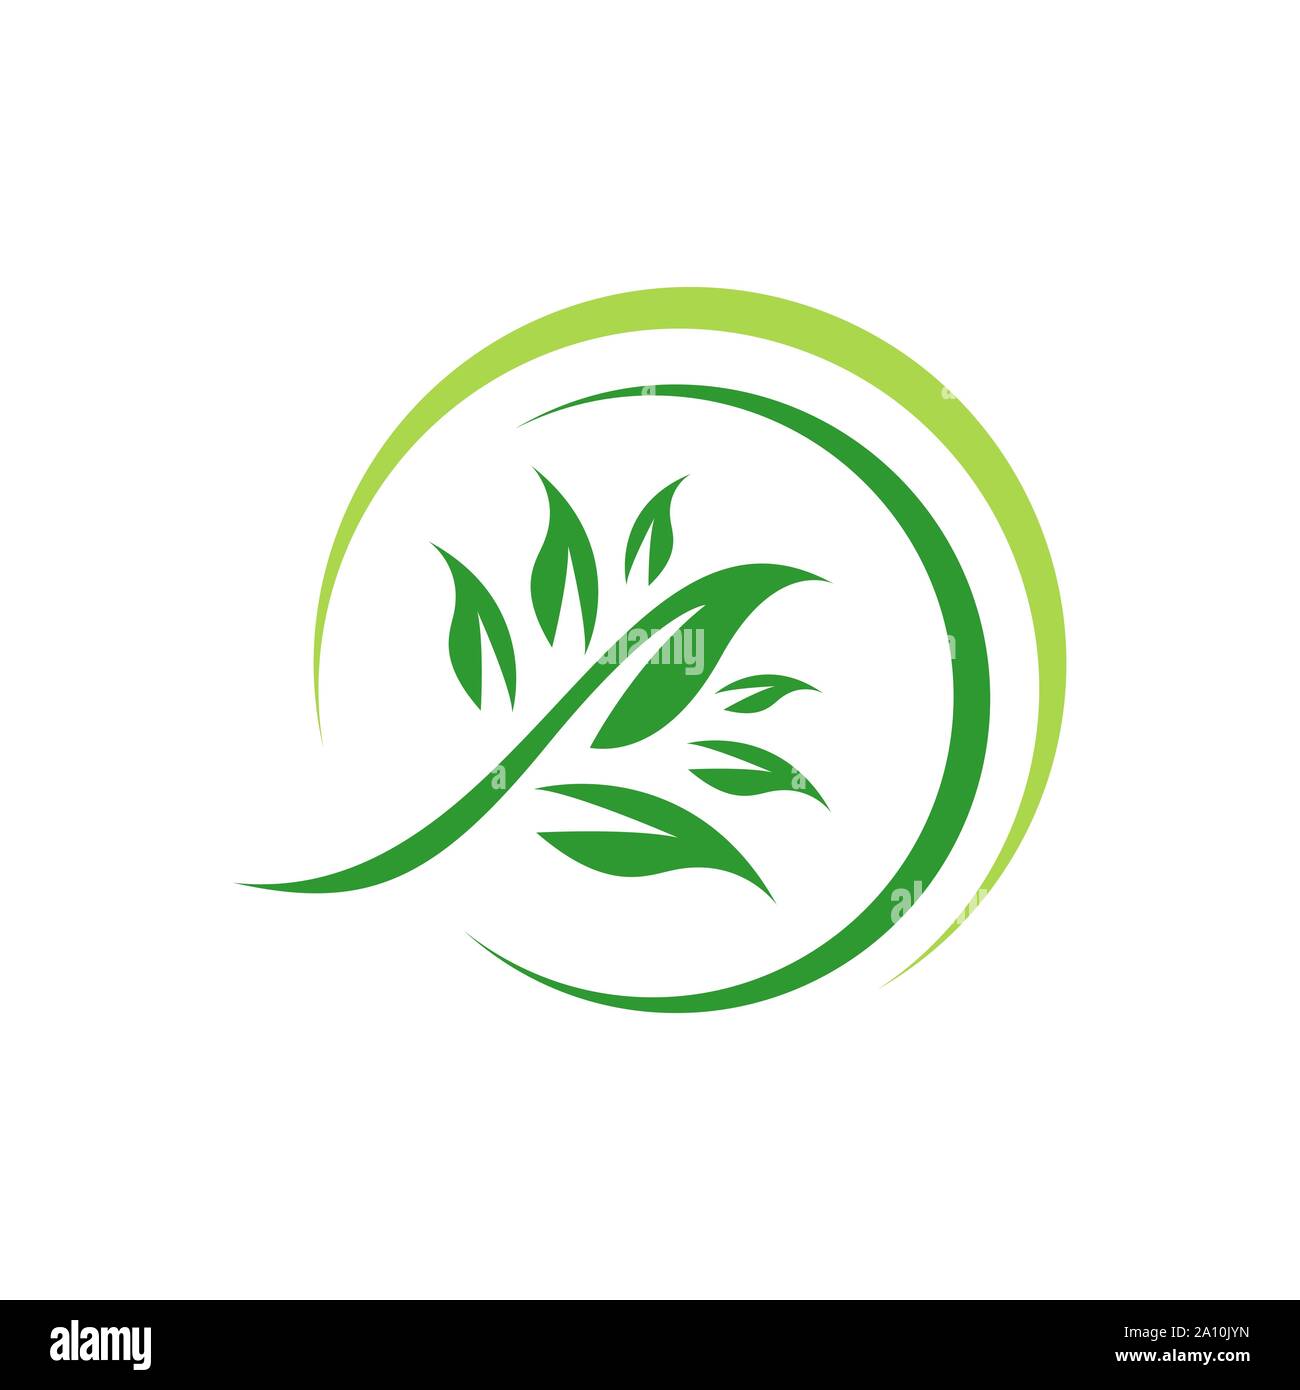 green leaf eco friendly logo design vector icon illustrations Stock Vector